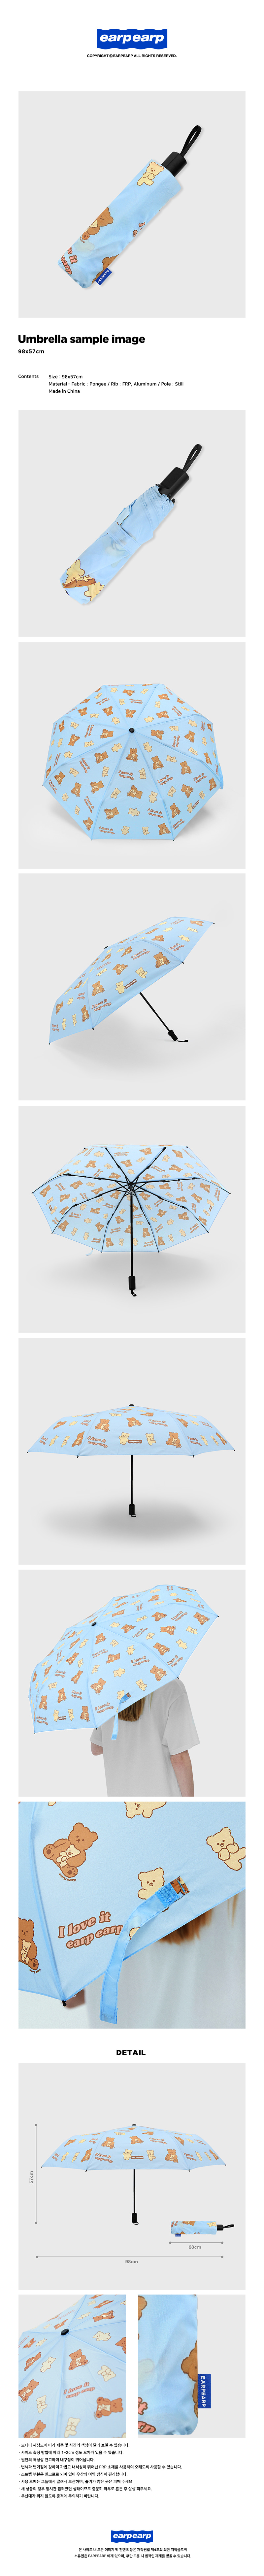  I love it nini-sky blue(우산)  25,000원 - 어프어프 패션잡화, 양/우산, 양우산, 자동3단/5단 바보사랑  I love it nini-sky blue(우산)  25,000원 - 어프어프 패션잡화, 양/우산, 양우산, 자동3단/5단 바보사랑